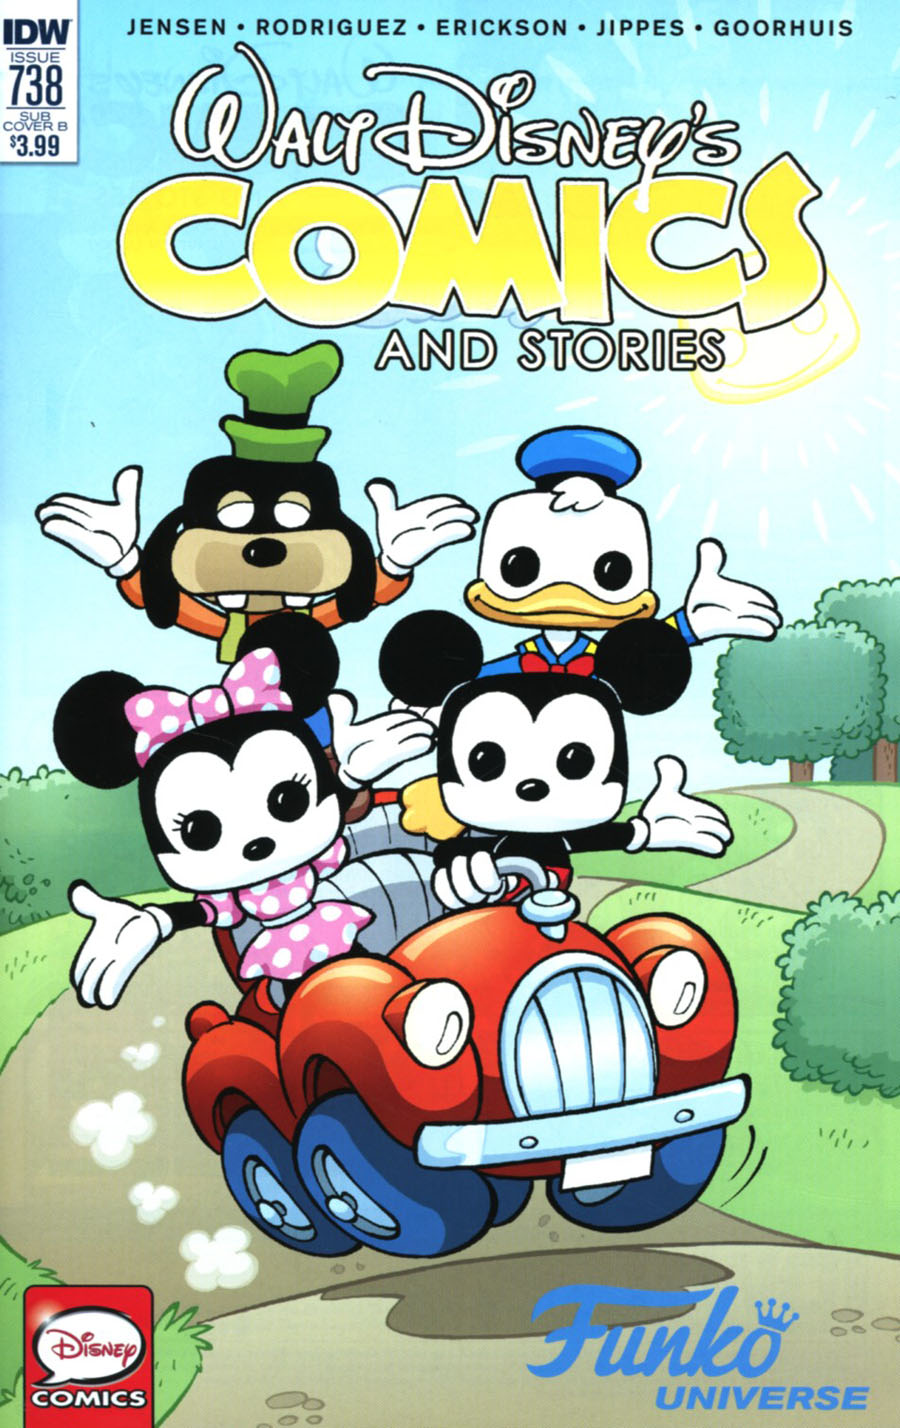 Walt Disneys Comics & Stories #738 Cover C Variant Fabrizio Petrossi Funko Art Cover